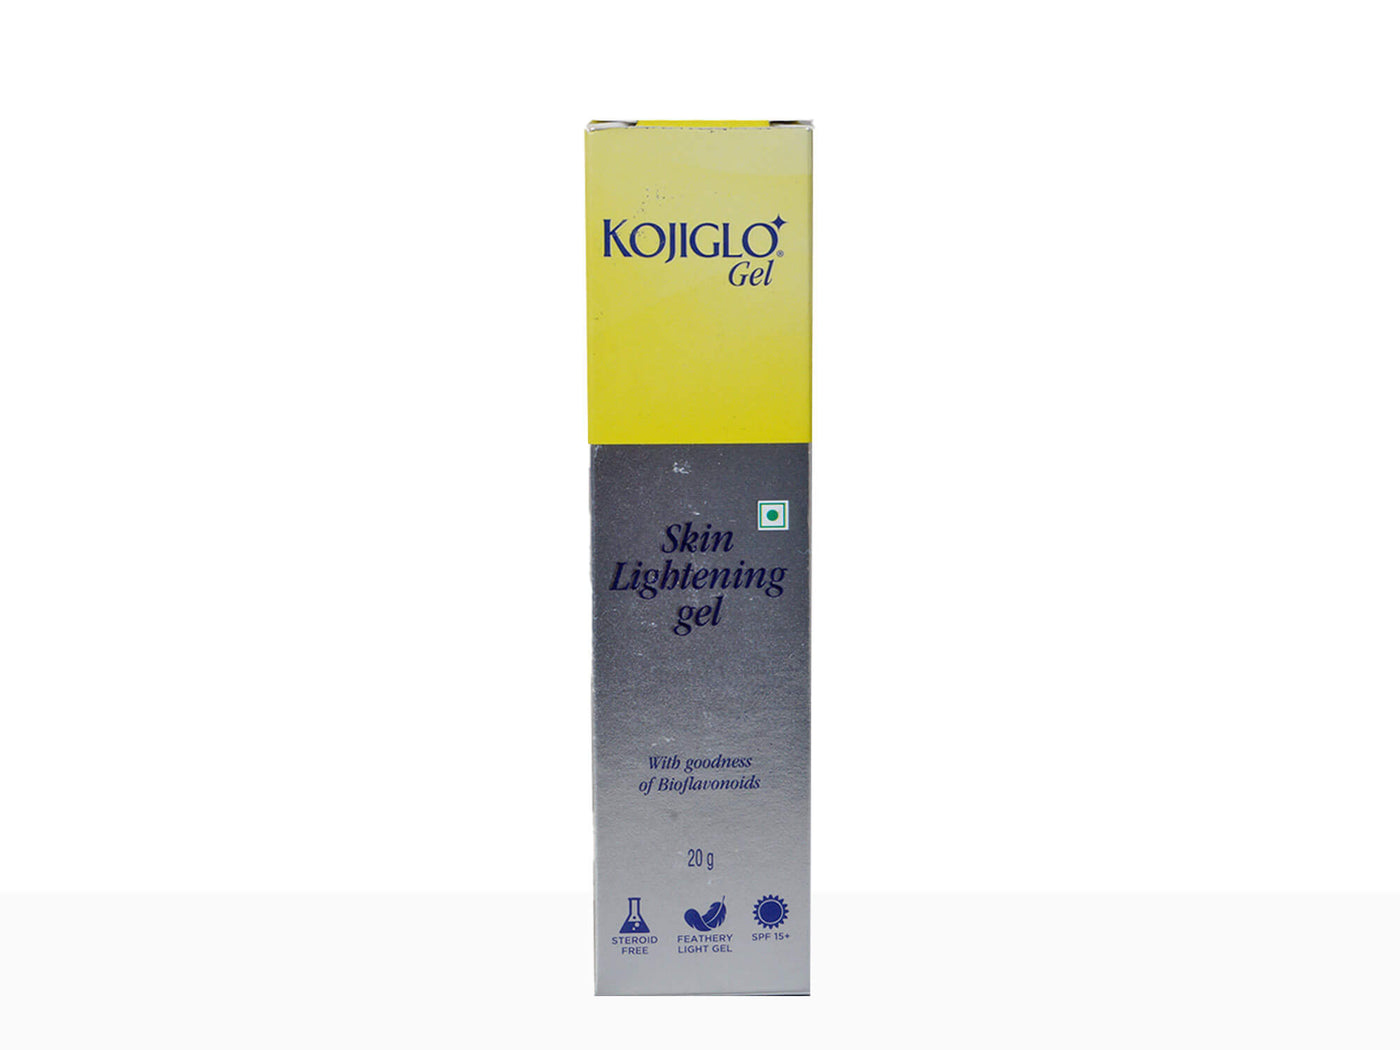 Kojiglo Skin Lightening Gel - Clinikally